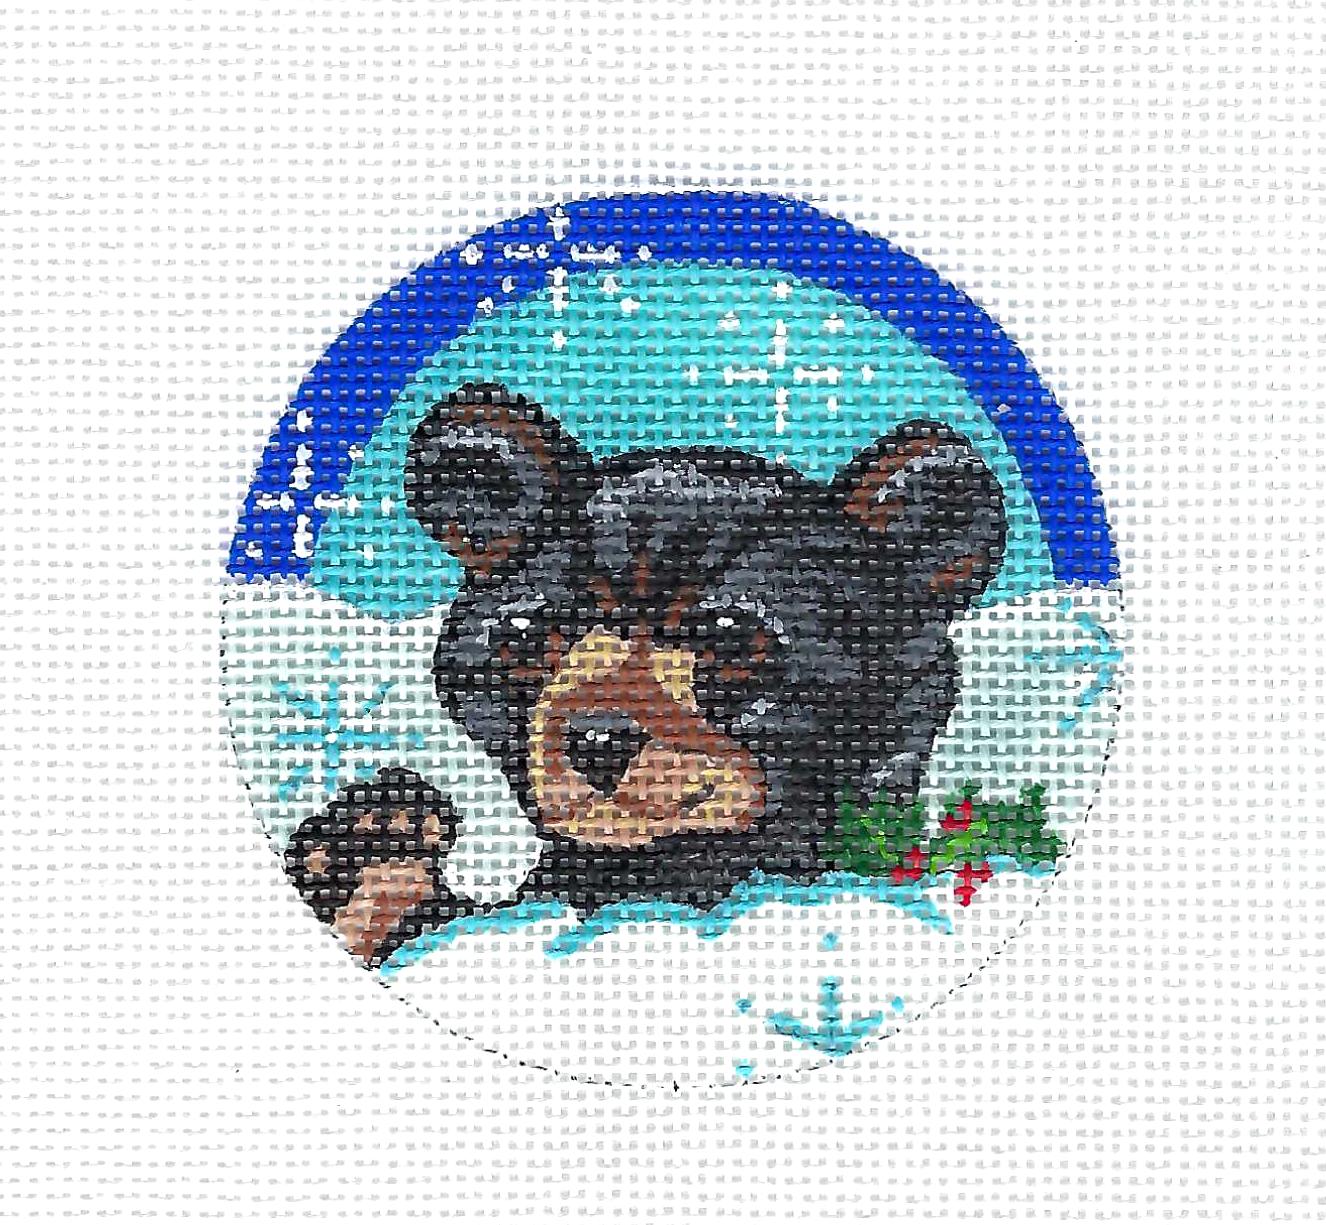 Baby Black Bear 3" Rd. Ornament Handpainted 18 Mesh Needlepoint Canvas by Kamala from JulieMar